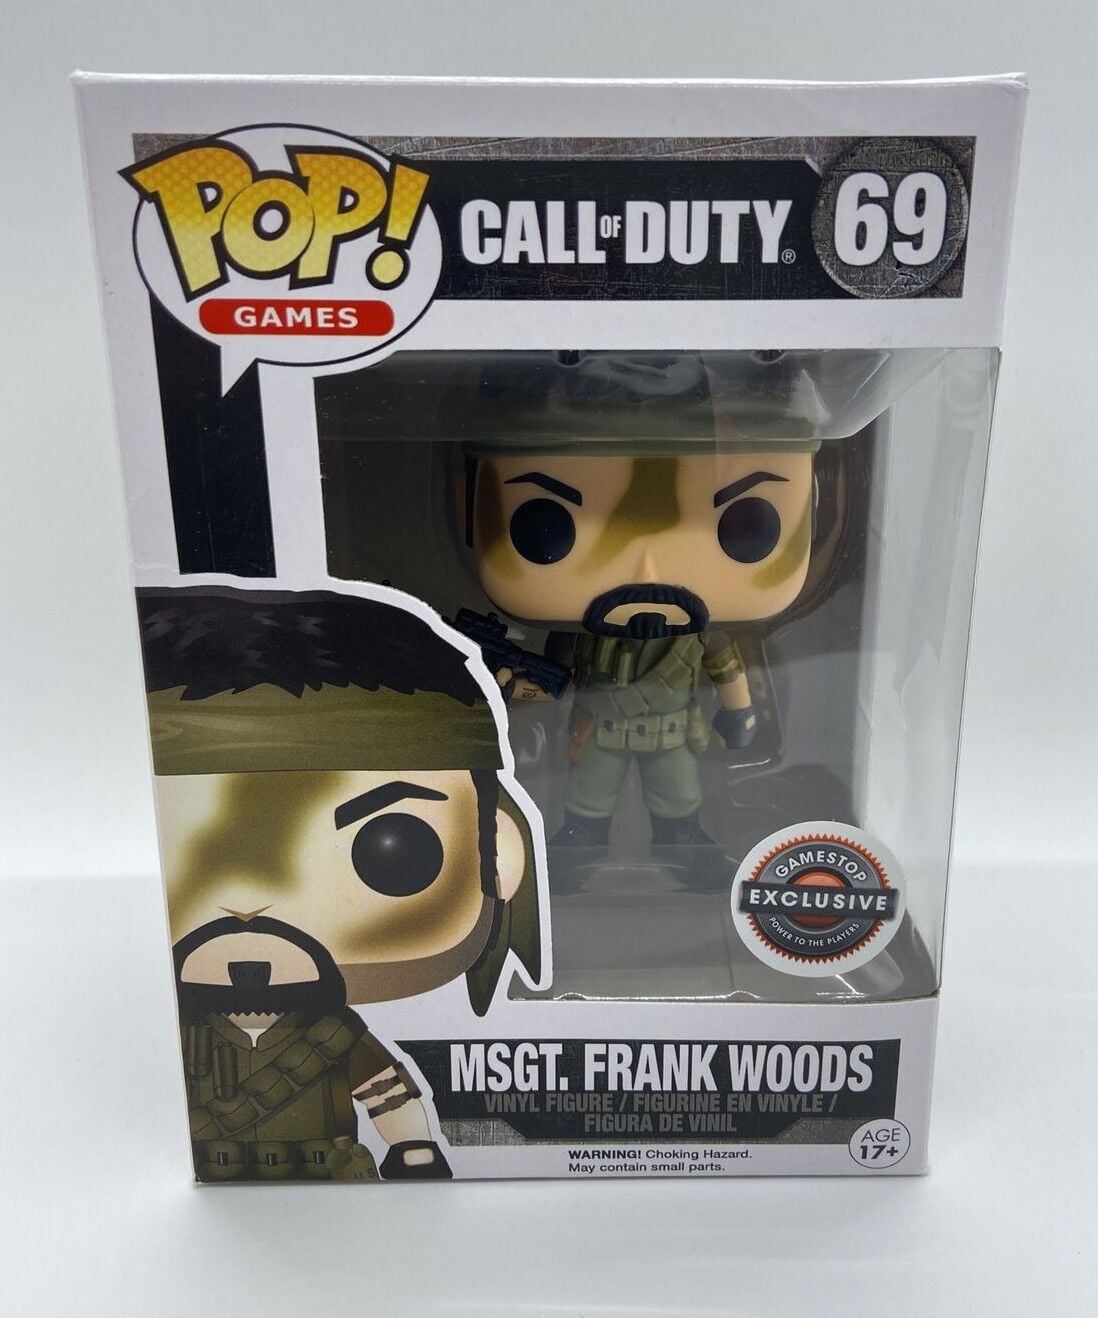 Funko Pop! Games Call Of Duty MSGT. FRANK WOODS #69 GameStop Exclusive 